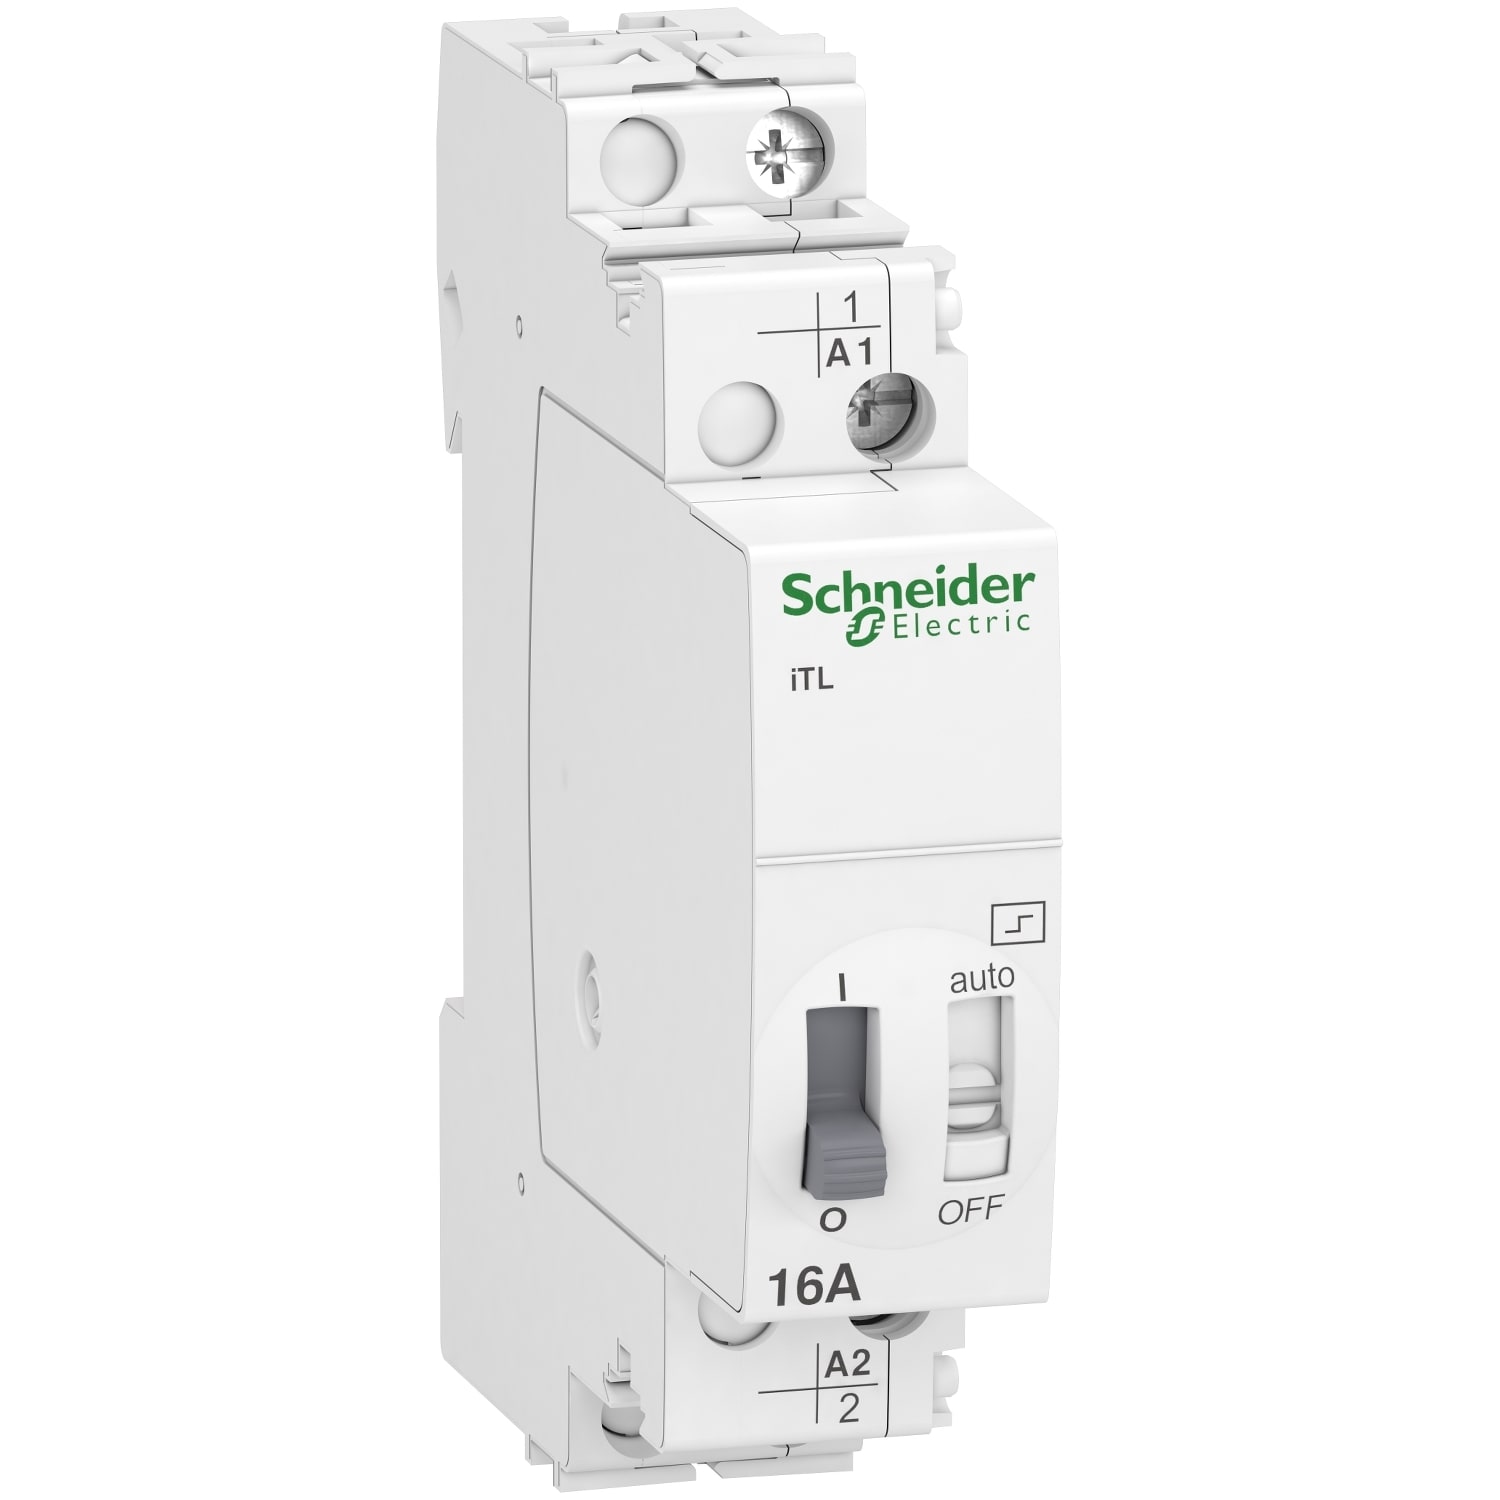 Schneider Electric - Acti9, iTL telerupteur 16A 1NO 230...240VCA 110VCC 50-60Hz